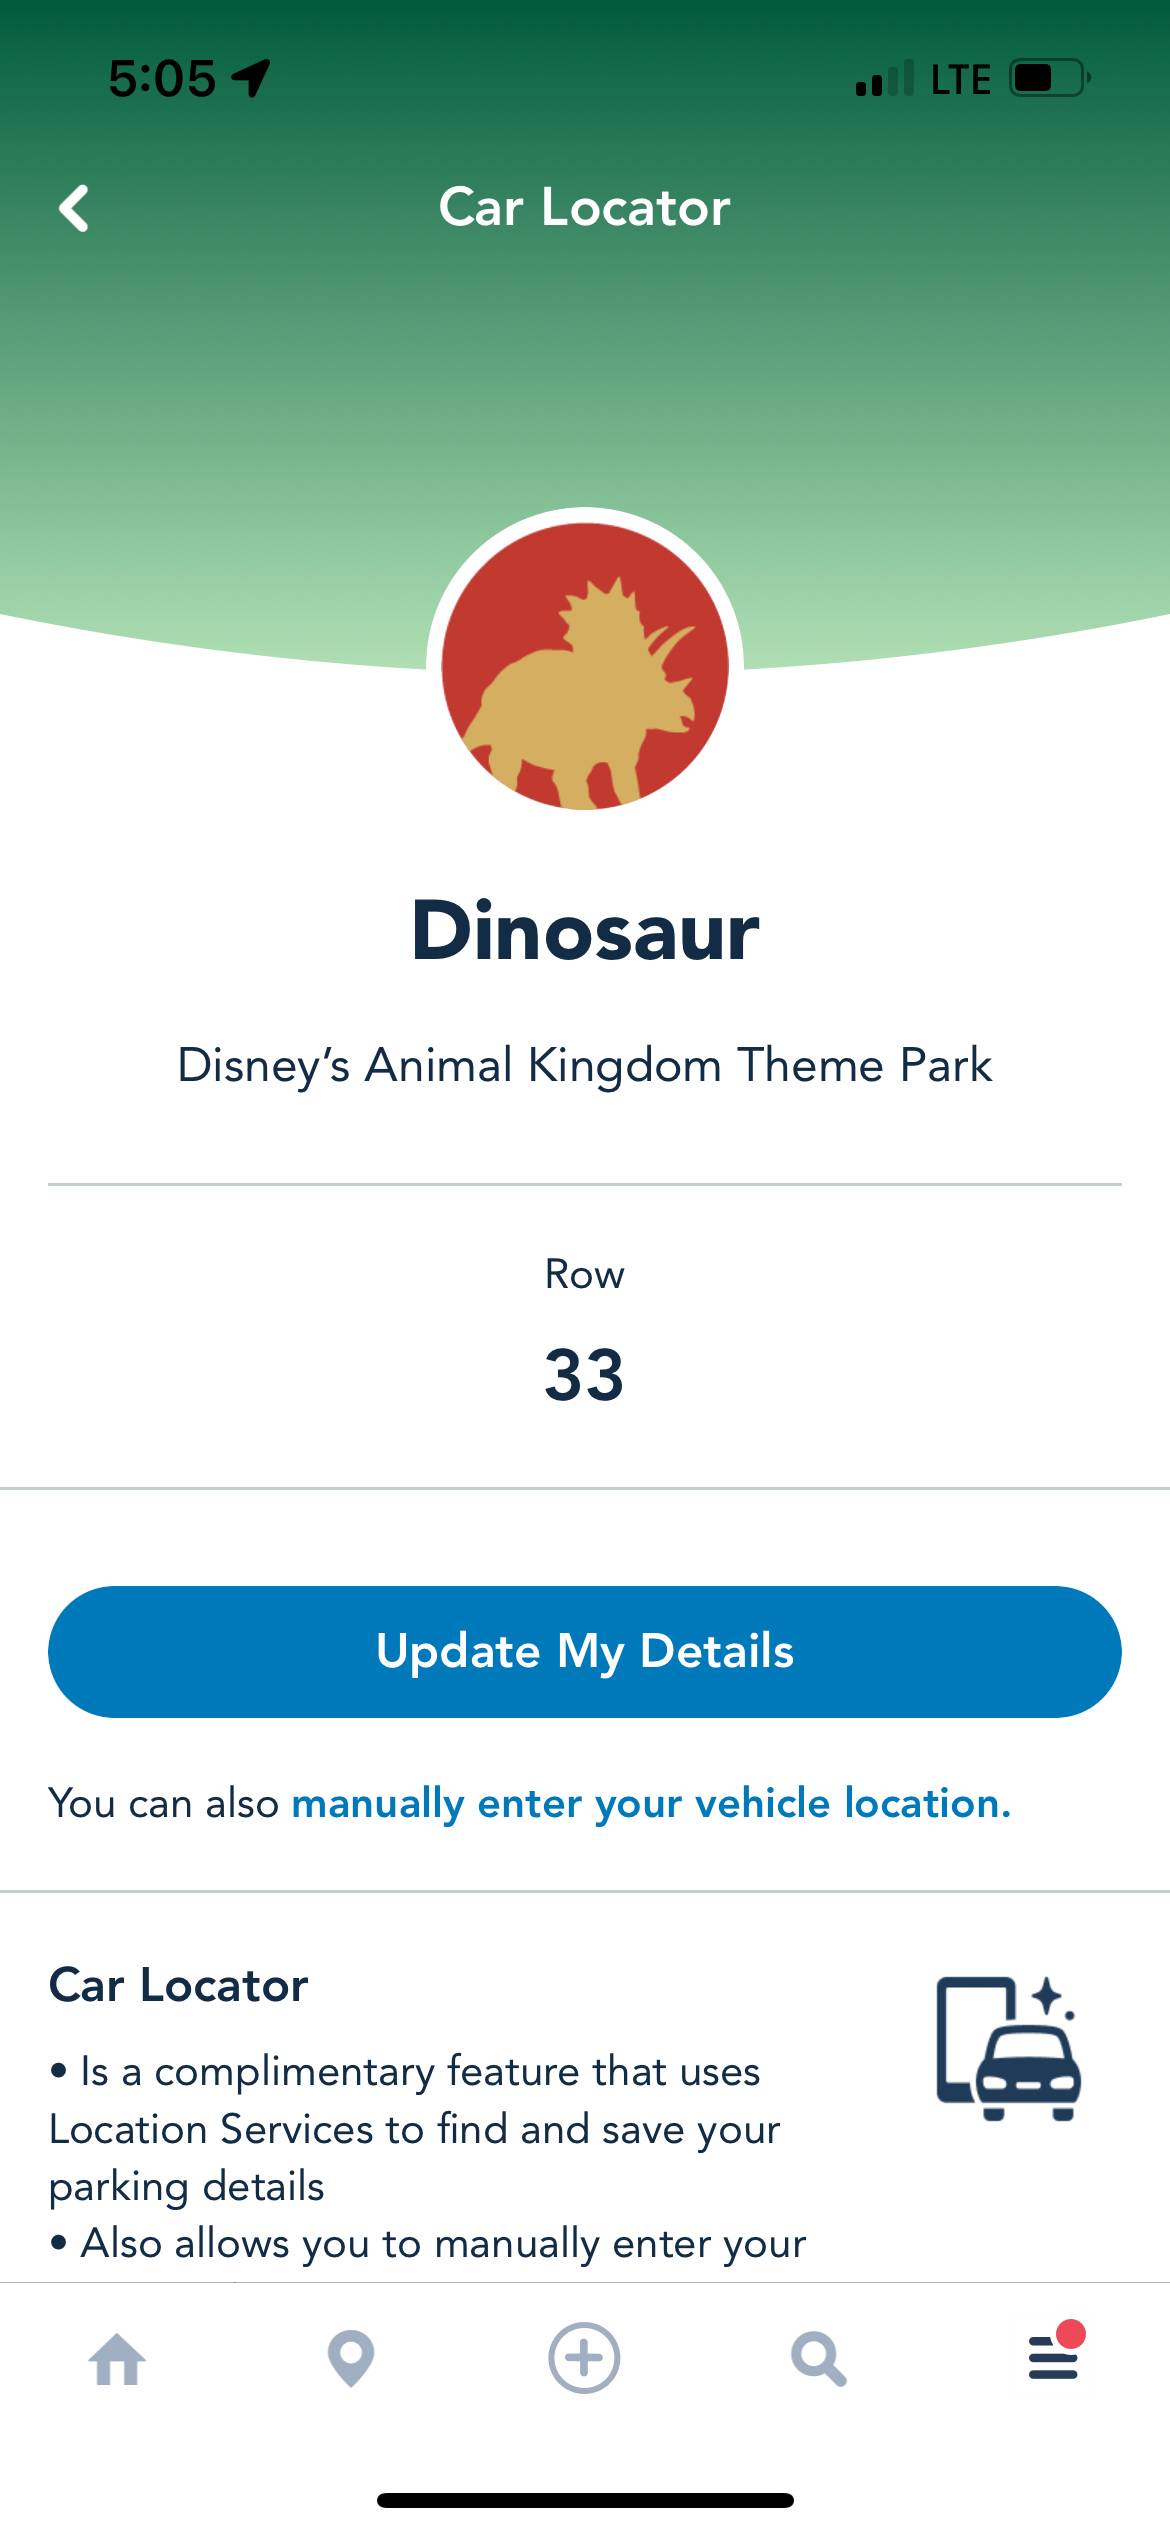 Car Locator in My Disney Experience